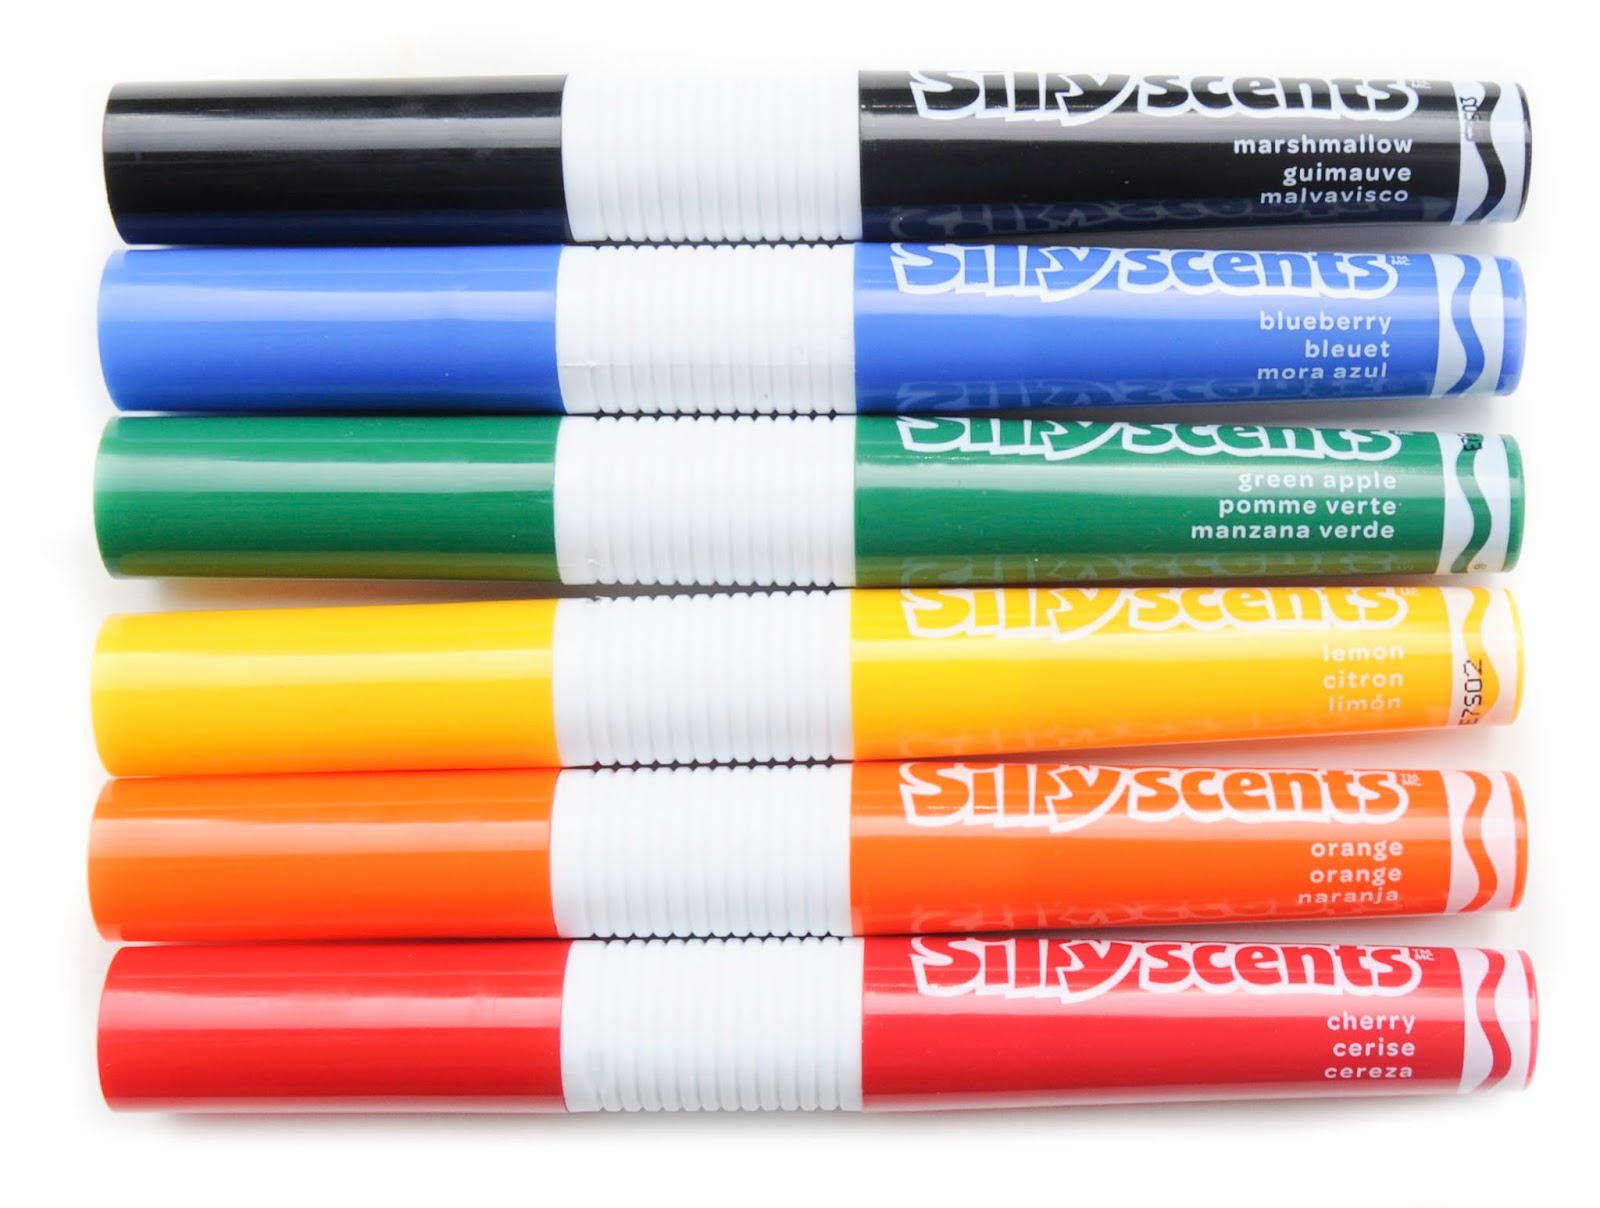 Silly Scents 12-Color Chisel Tip Washable Marker Set - 071662081997